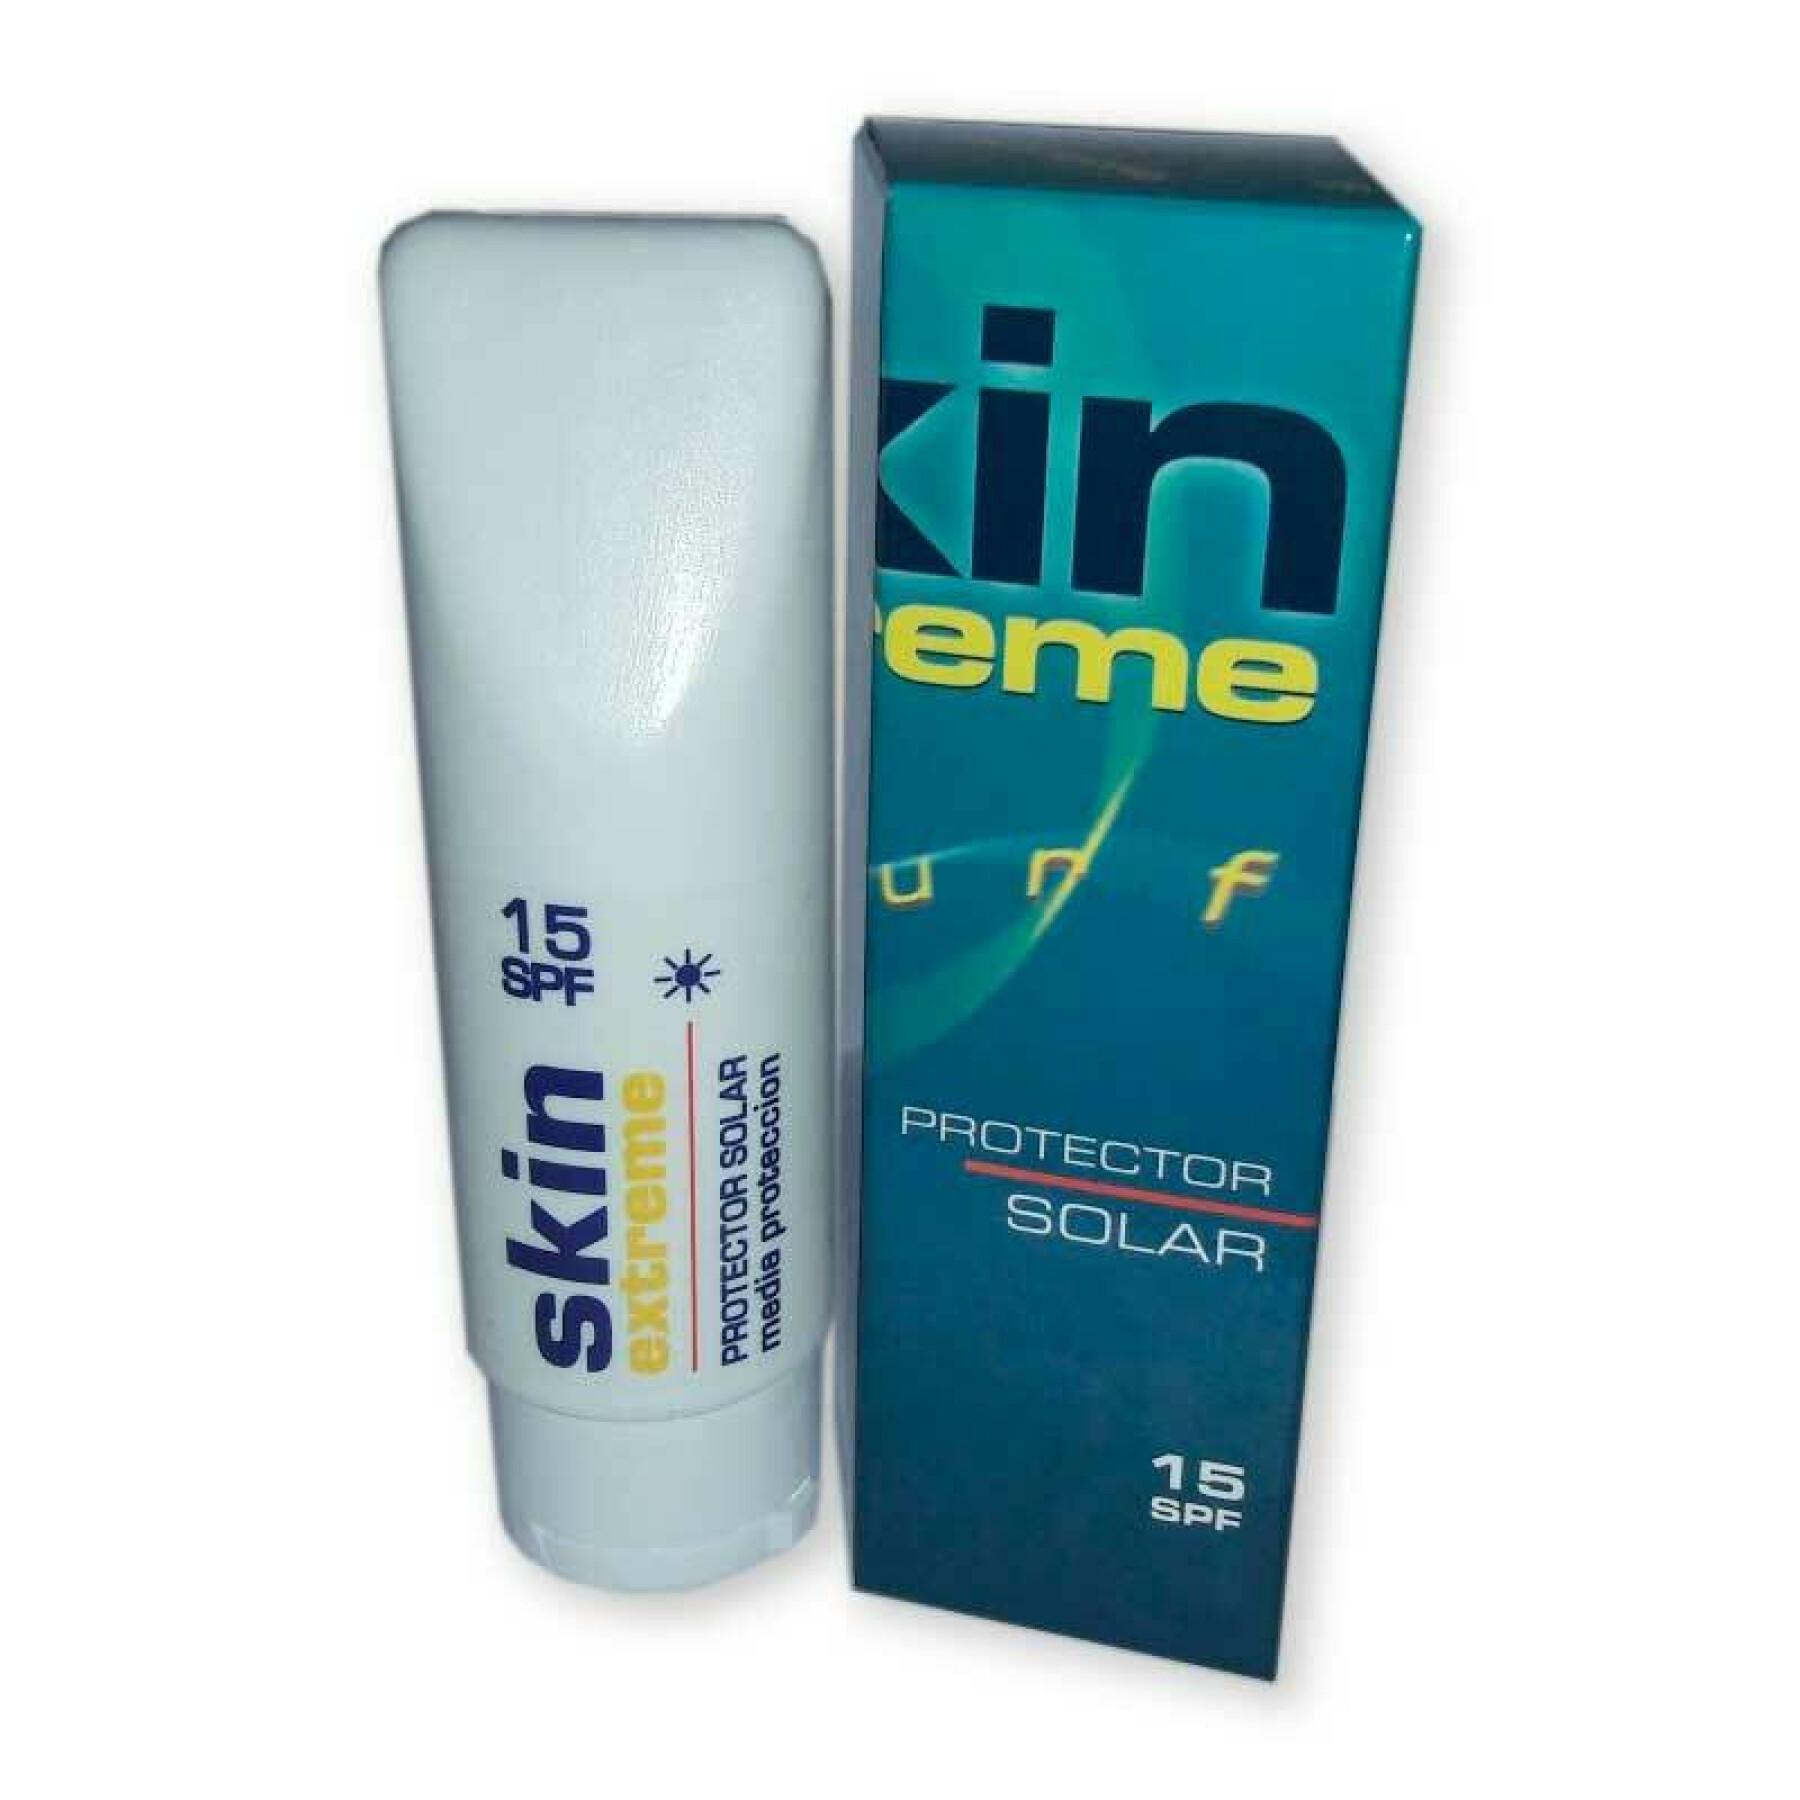 Sun protection Skin Xtreme 75 ml